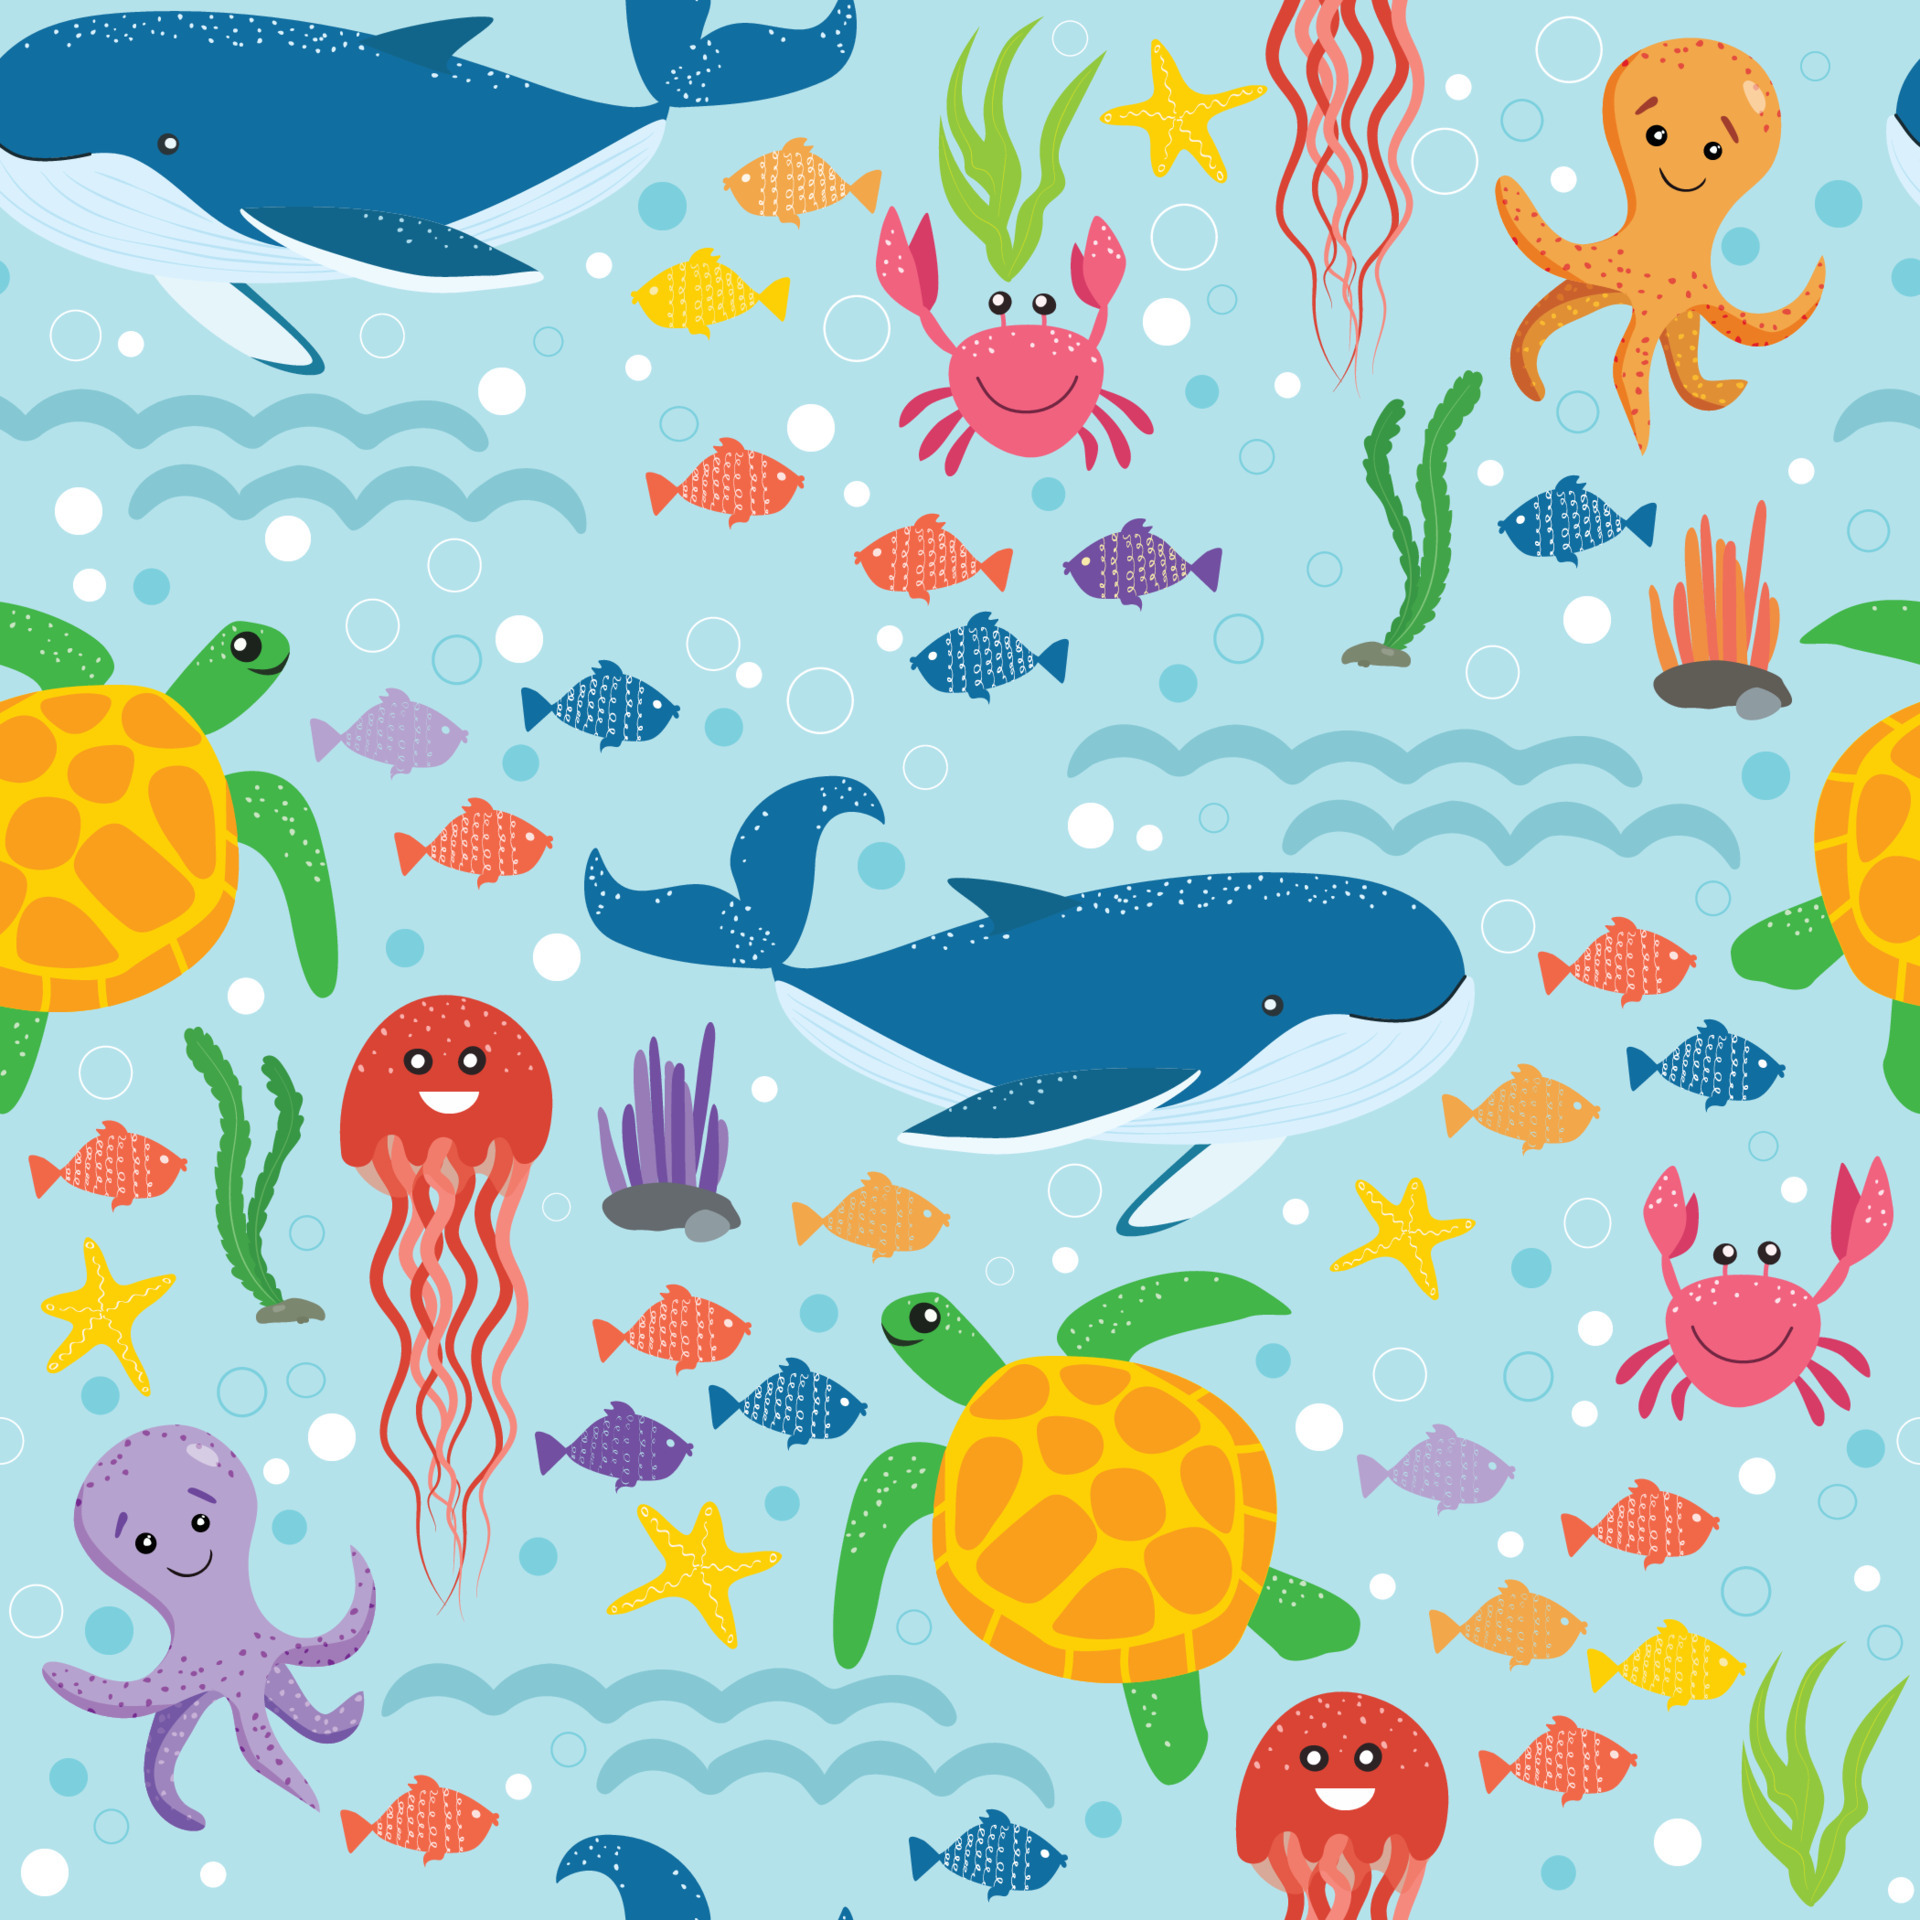 Wallpaper ID 314695  Animal Turtle Phone Wallpaper Sunbeam Sea Life  Underwater 1440x3040 free download